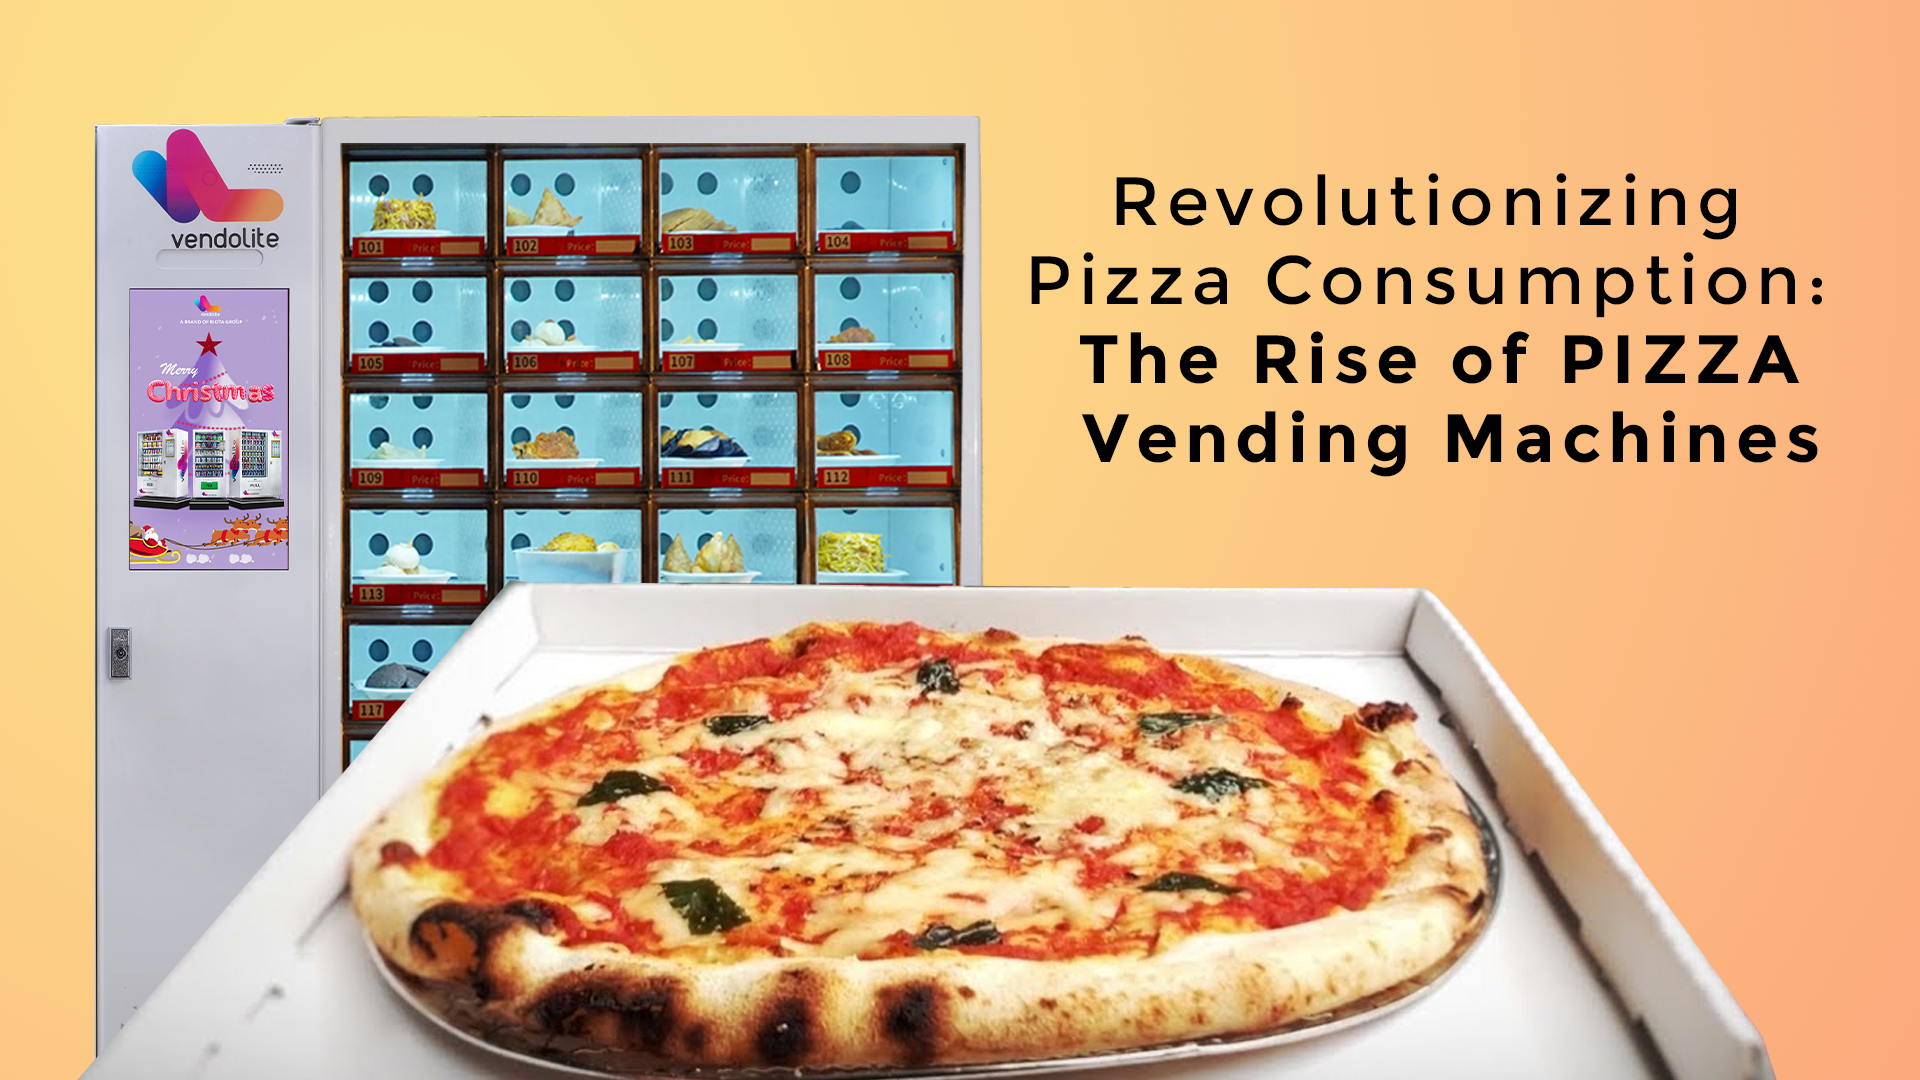 Revolutionizing Pizza Consumption: The Rise of Pizza Vending Machines